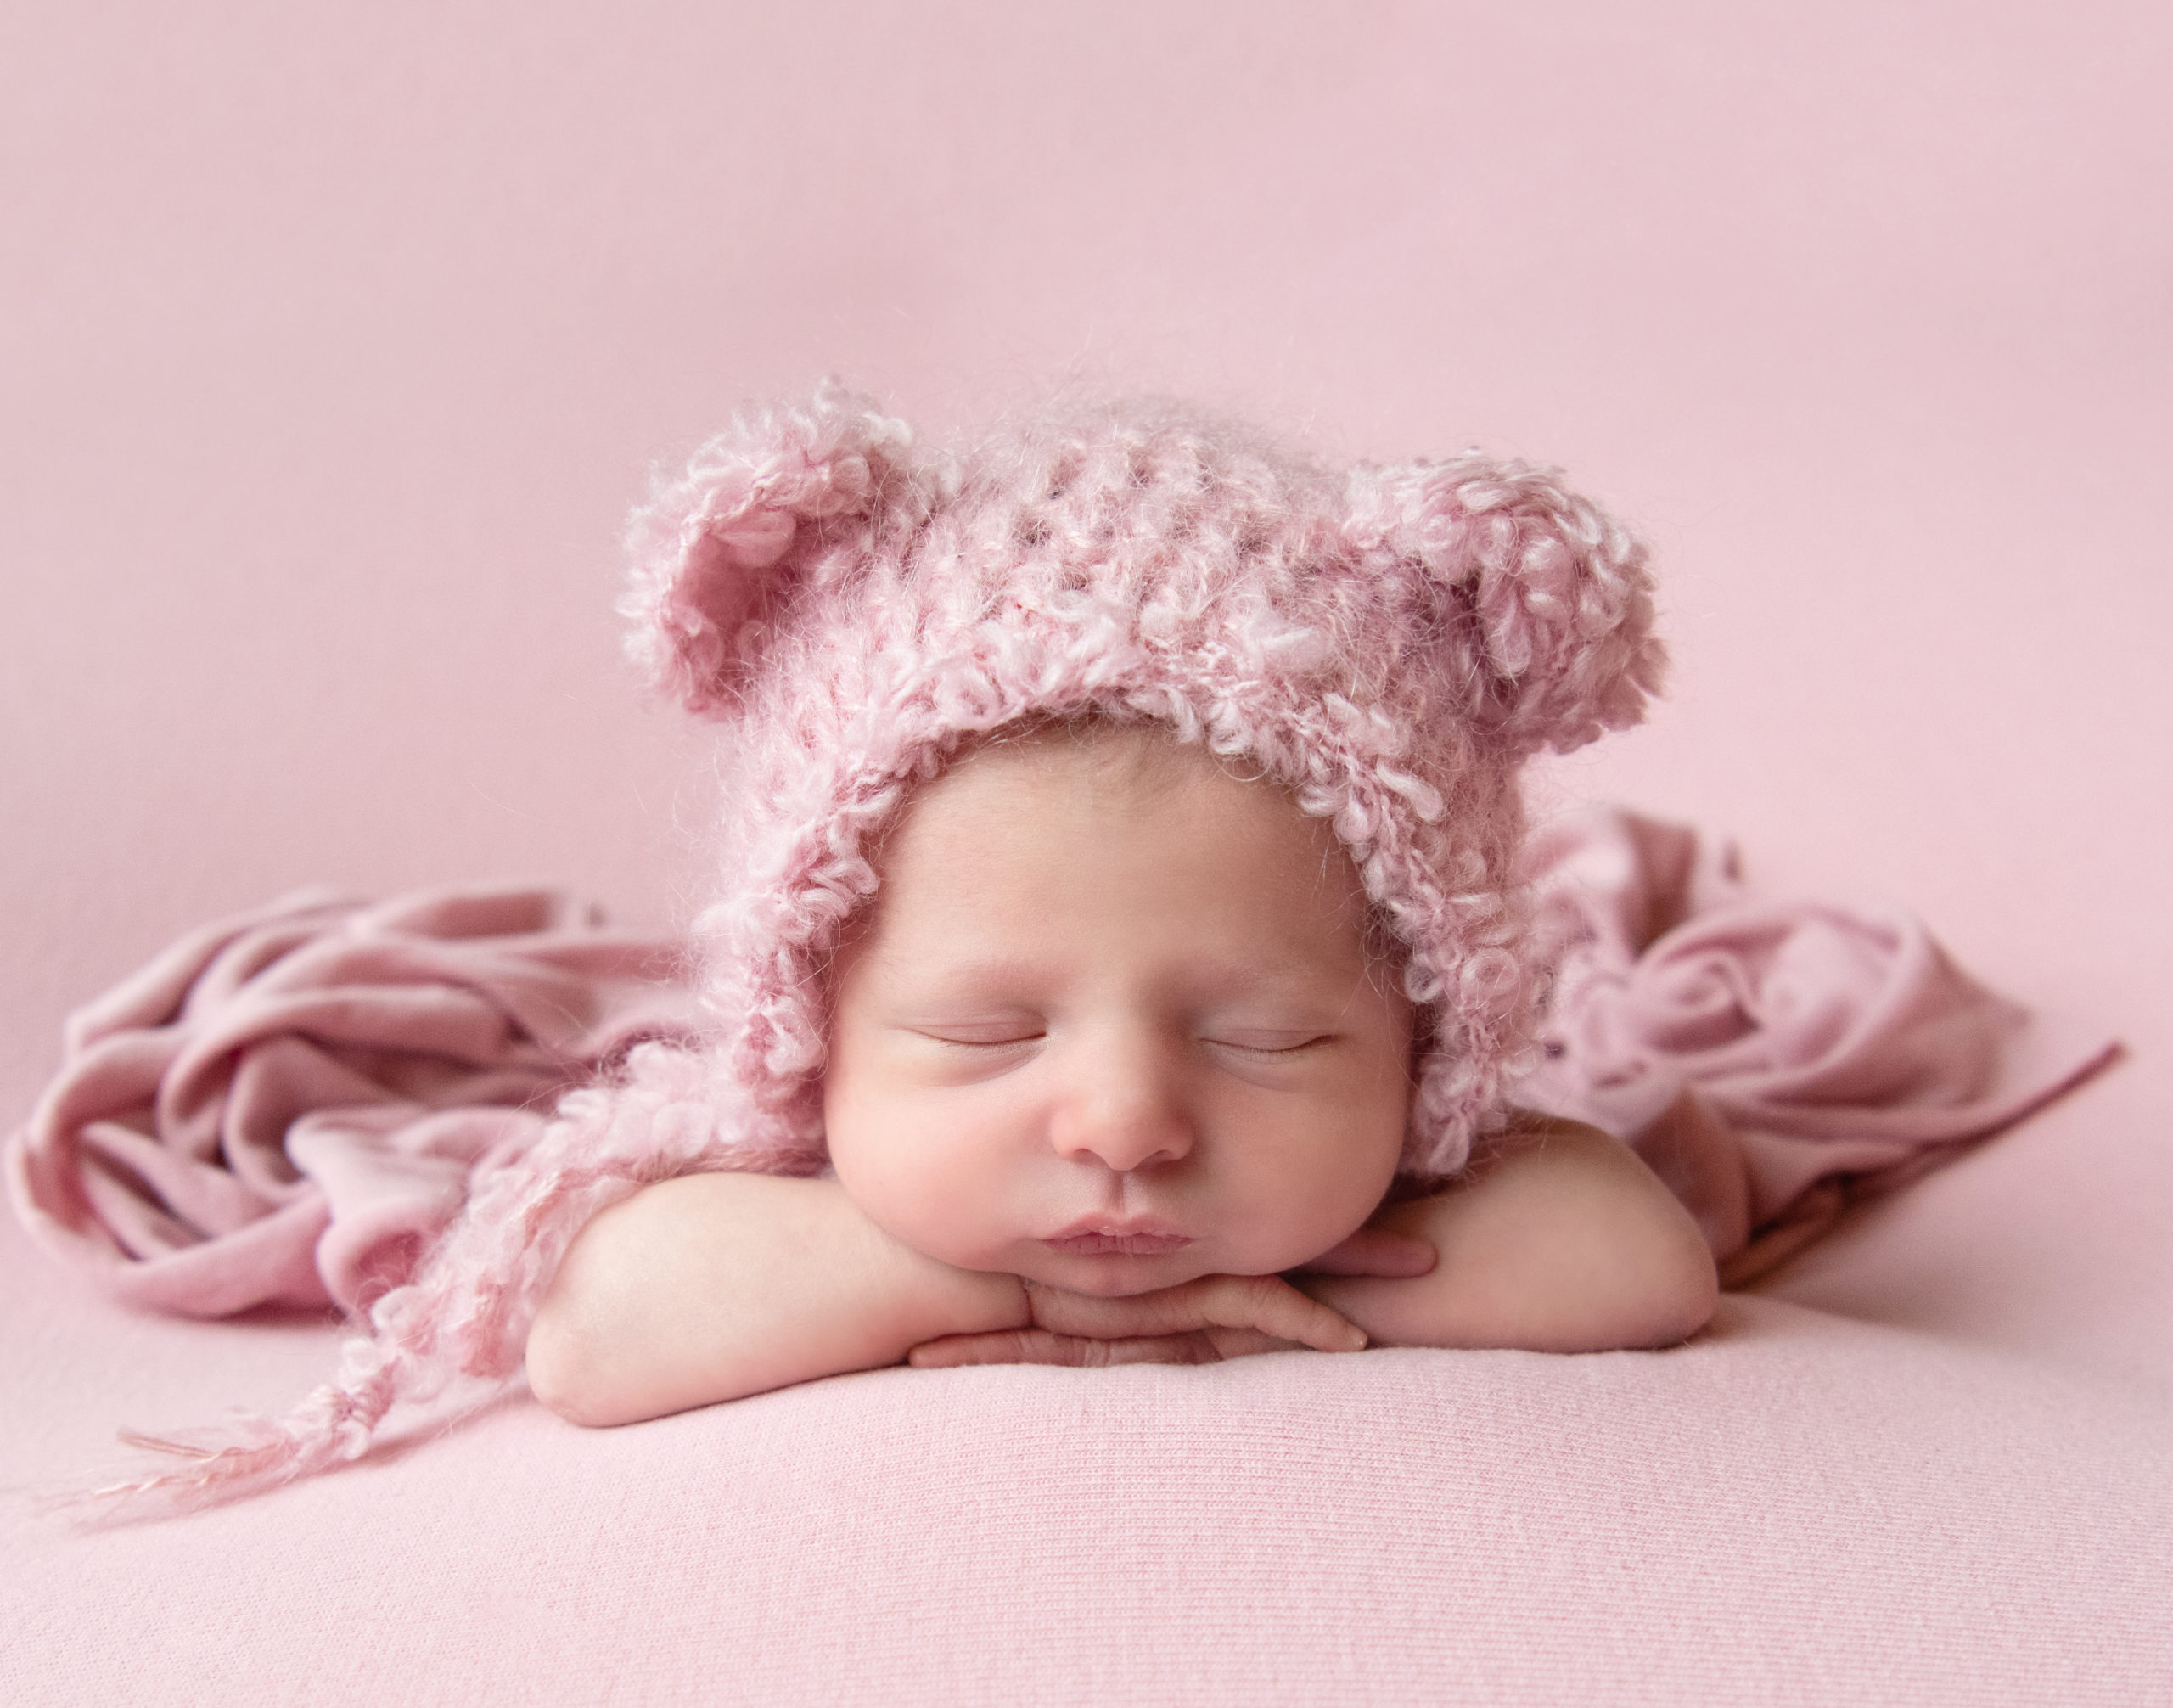 Newborn girl resting on her arms sleeping, cute pink bonnet